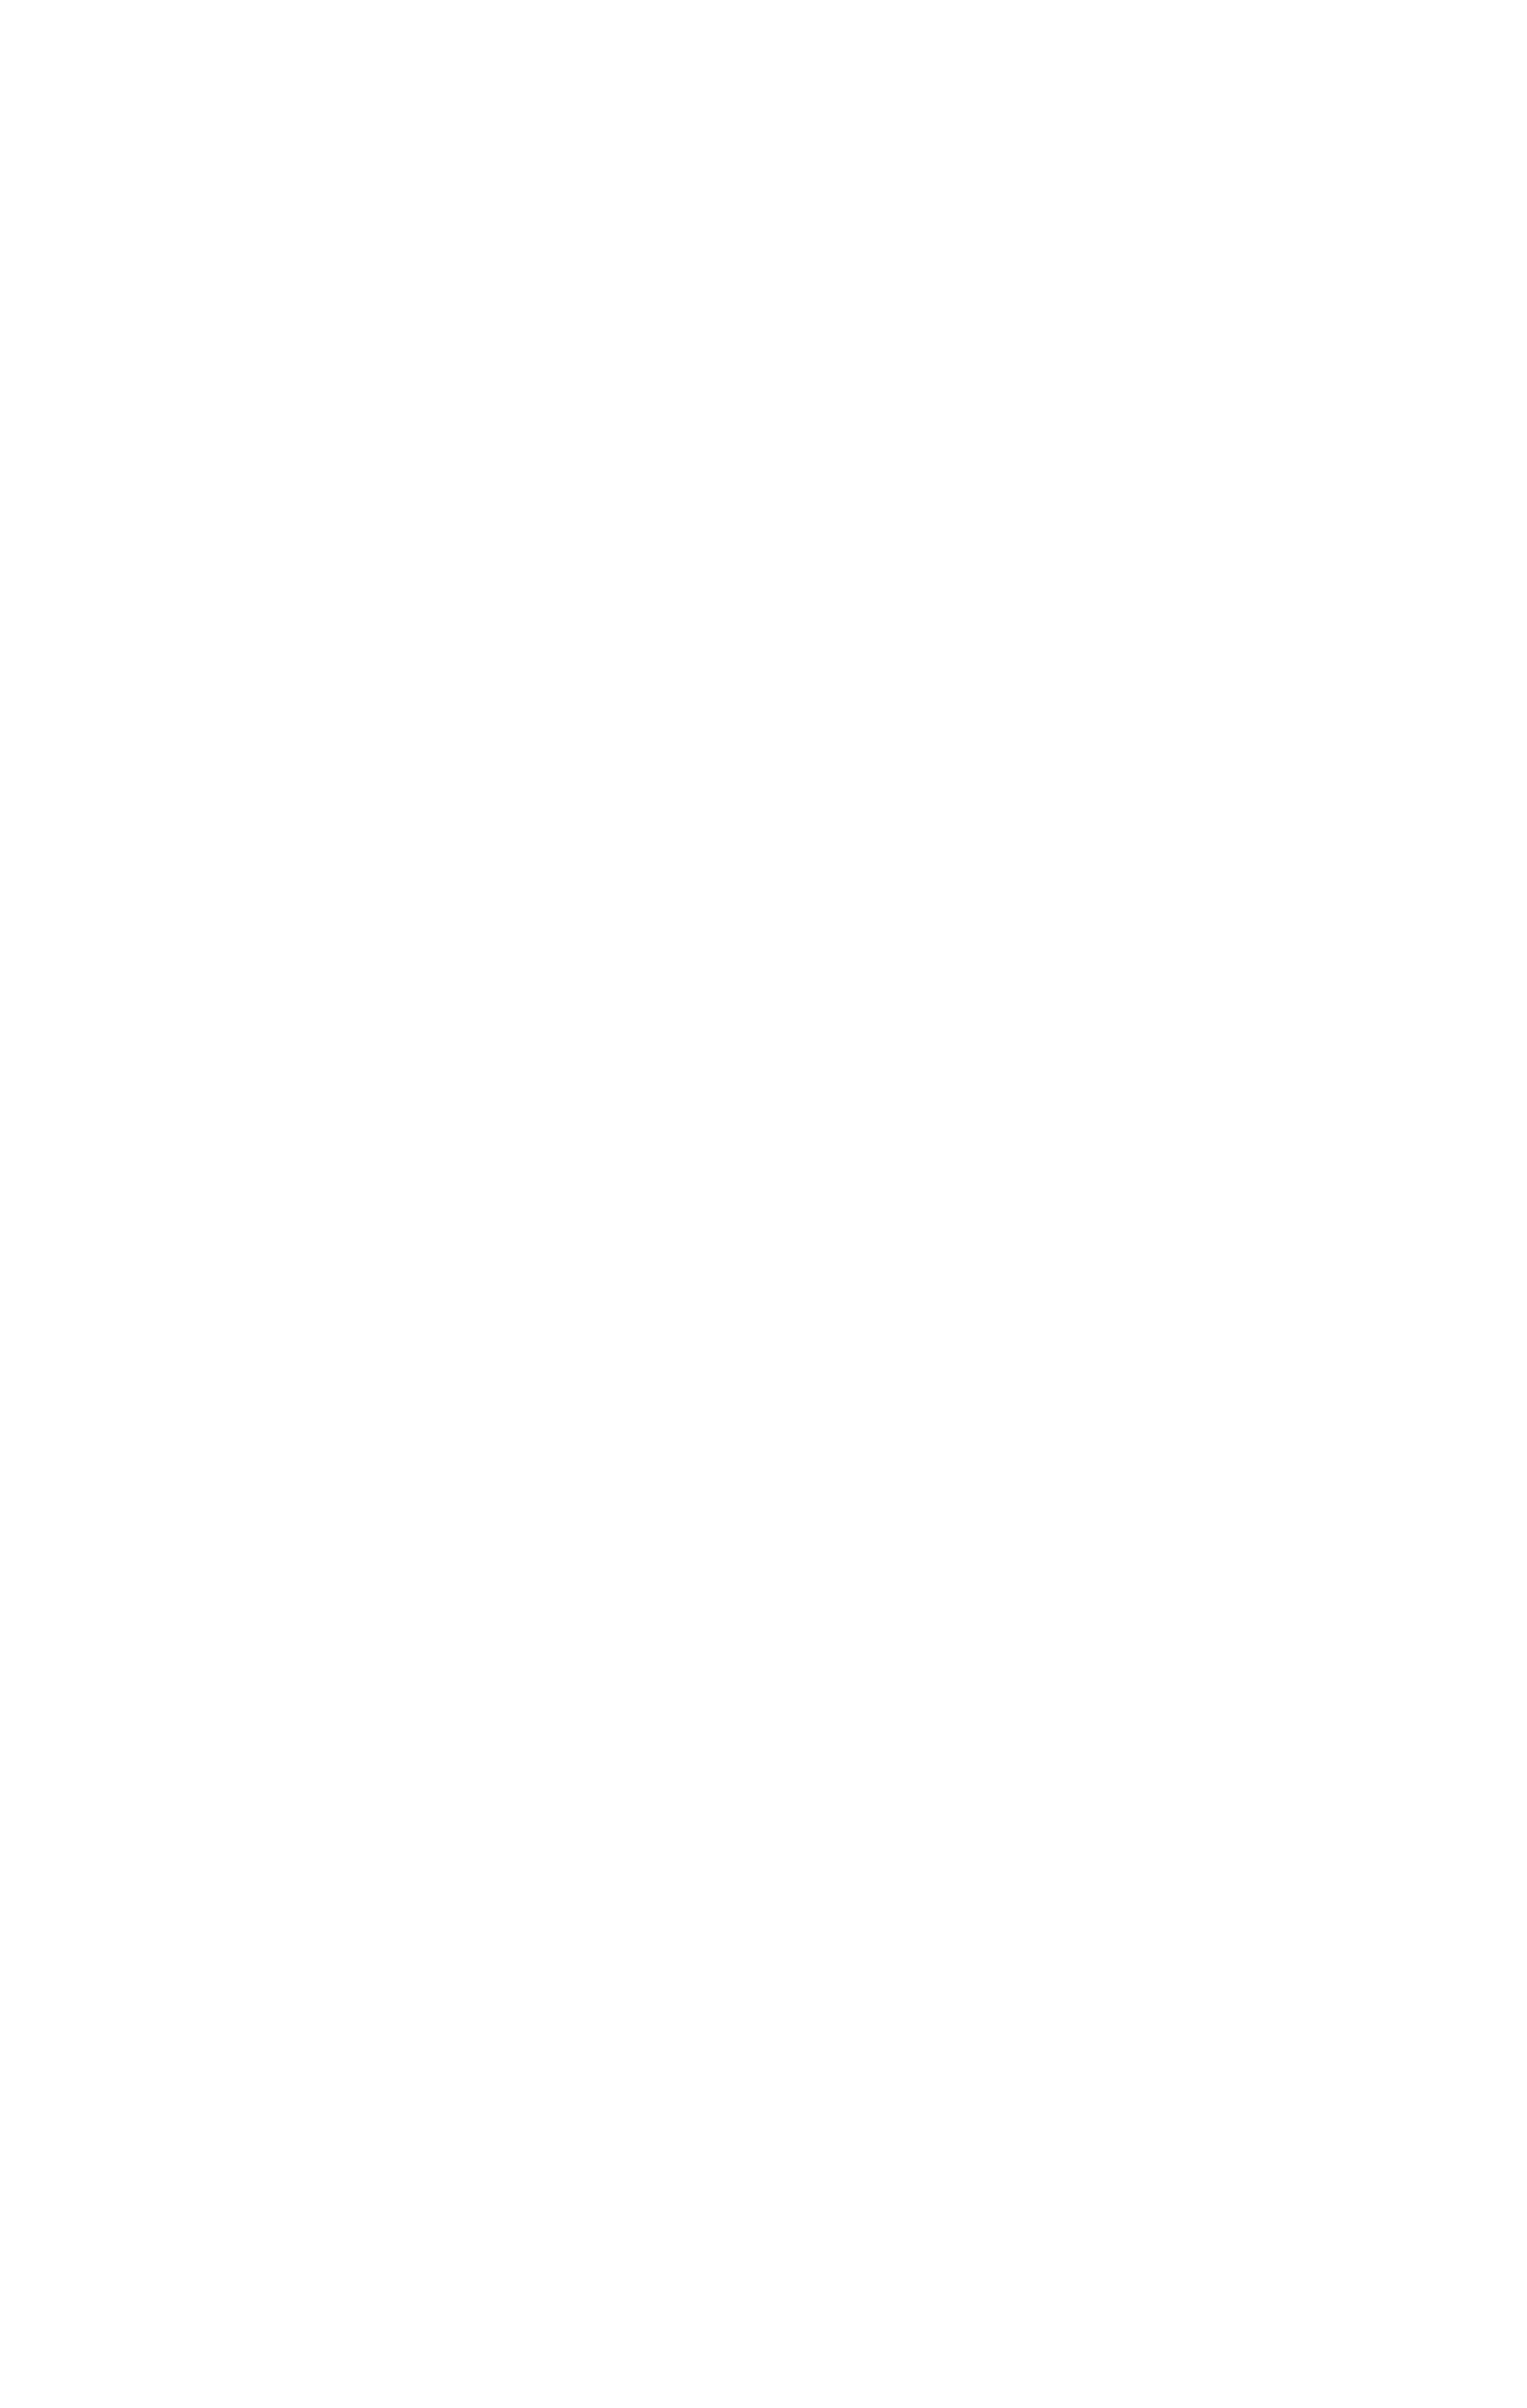 The Budapest Cafe